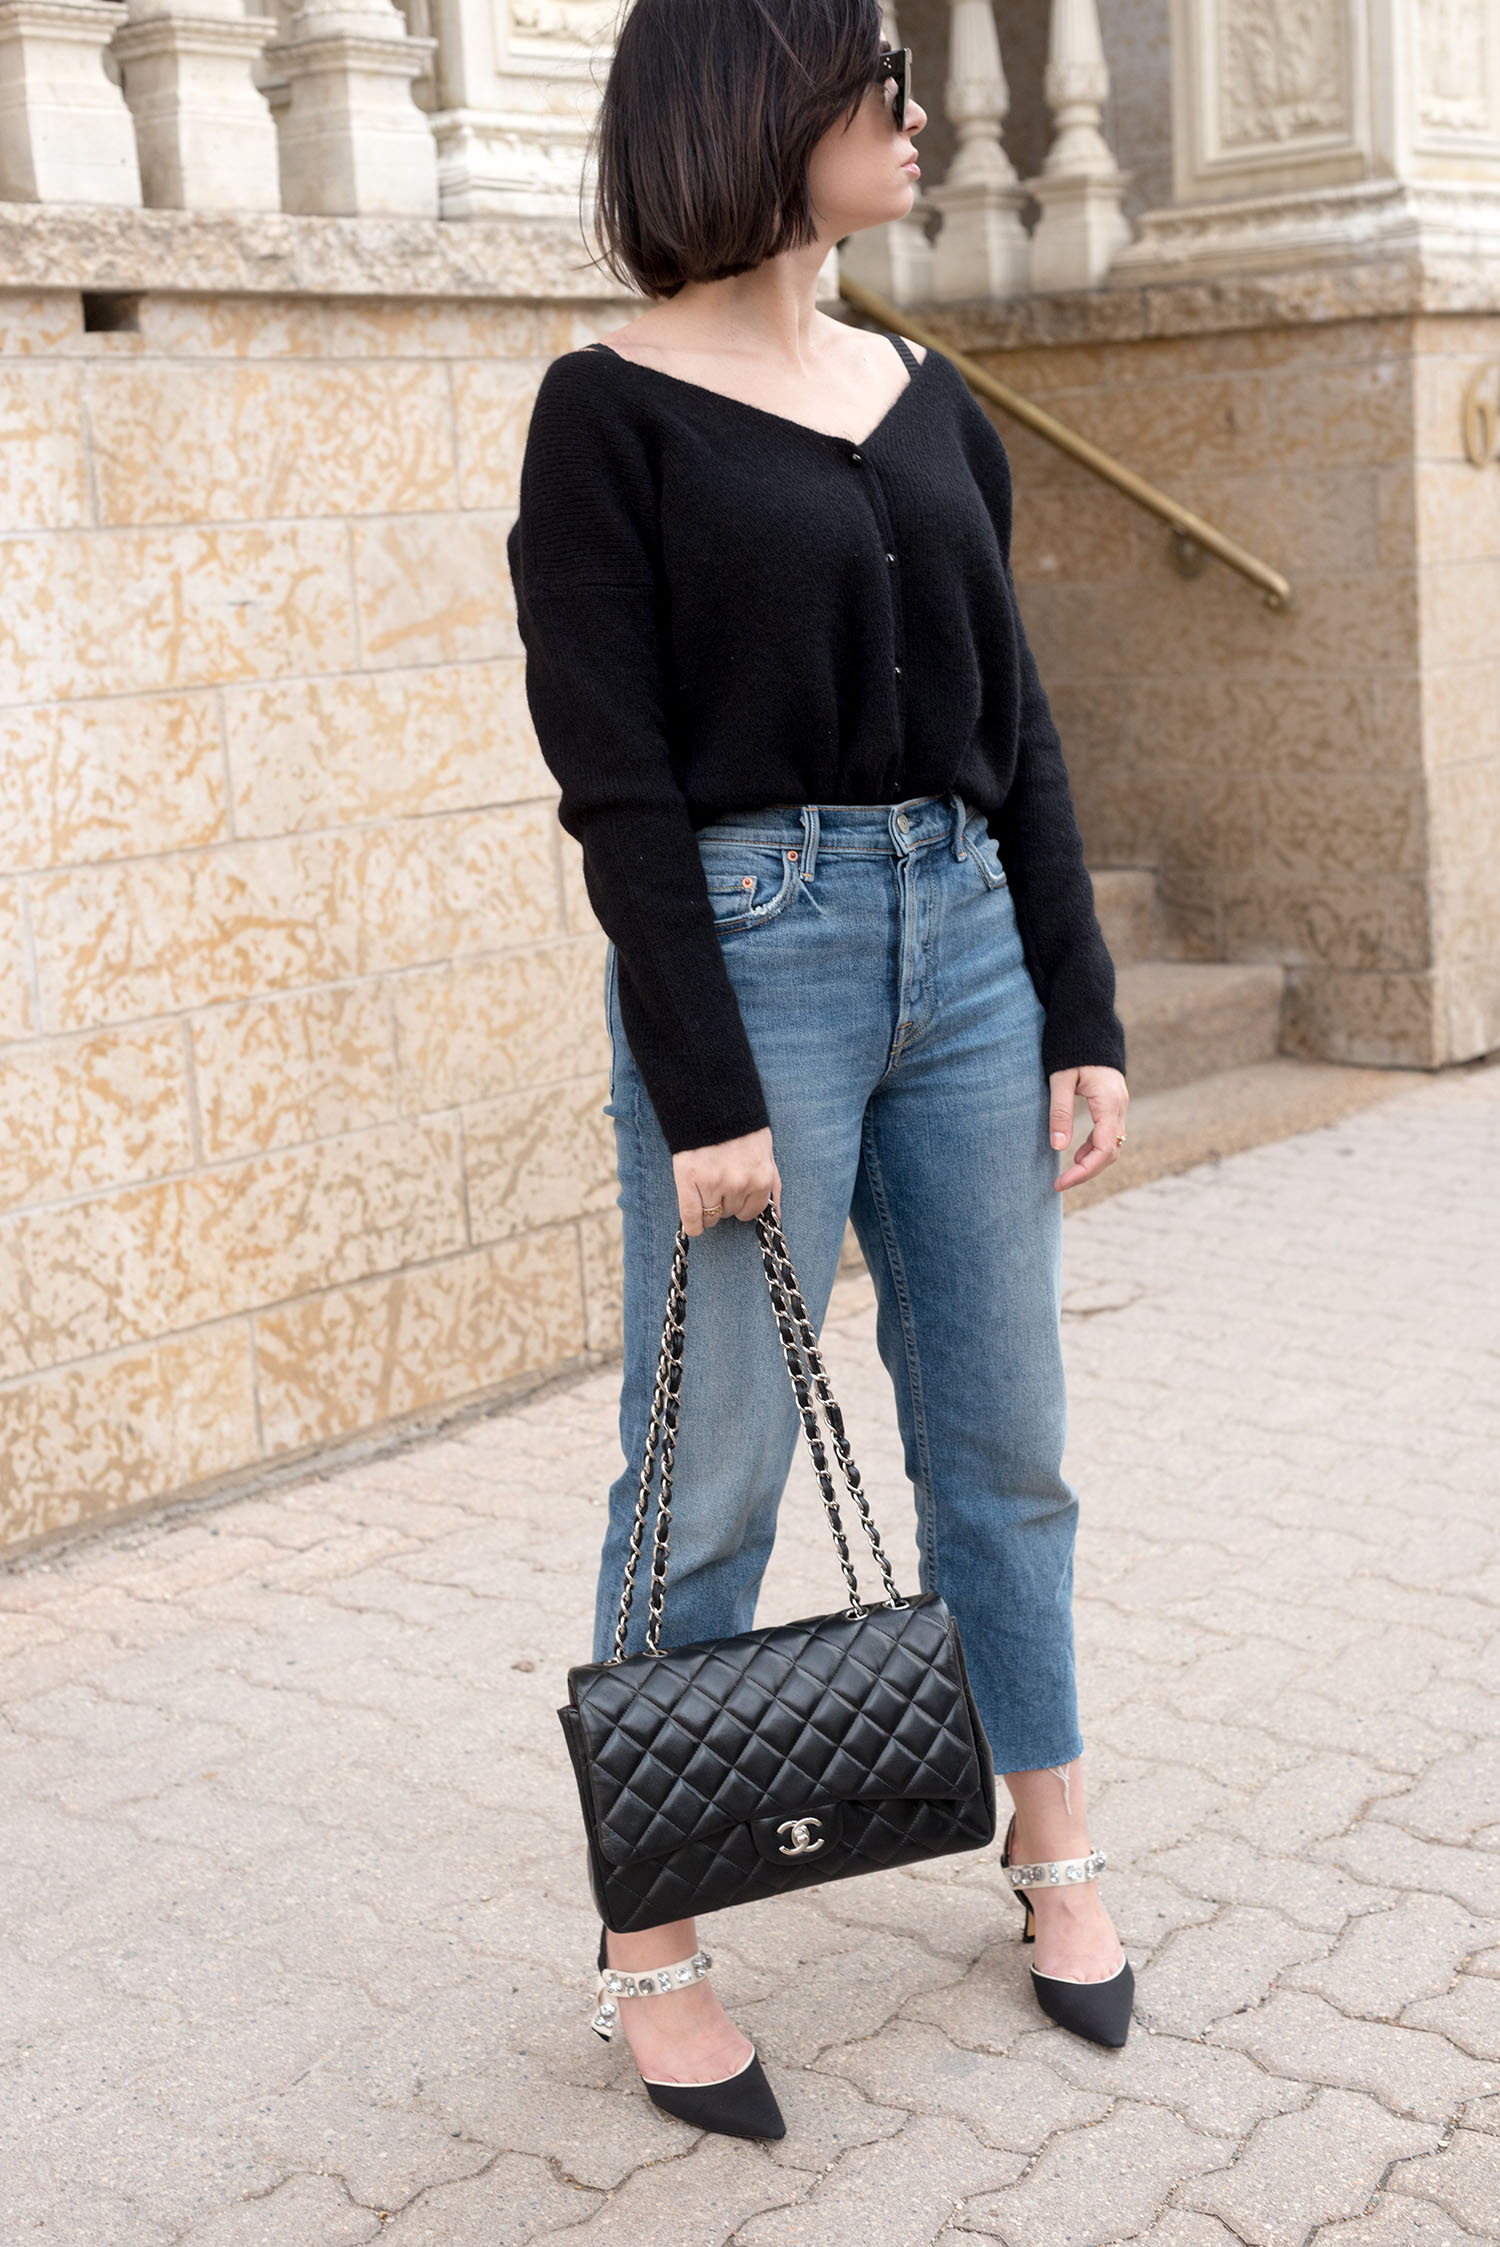 Top Canadian fashion blogger Cee Fardoe of Coco & Vera wears Grlfrnd Helena jeans and Zara slingback pumps